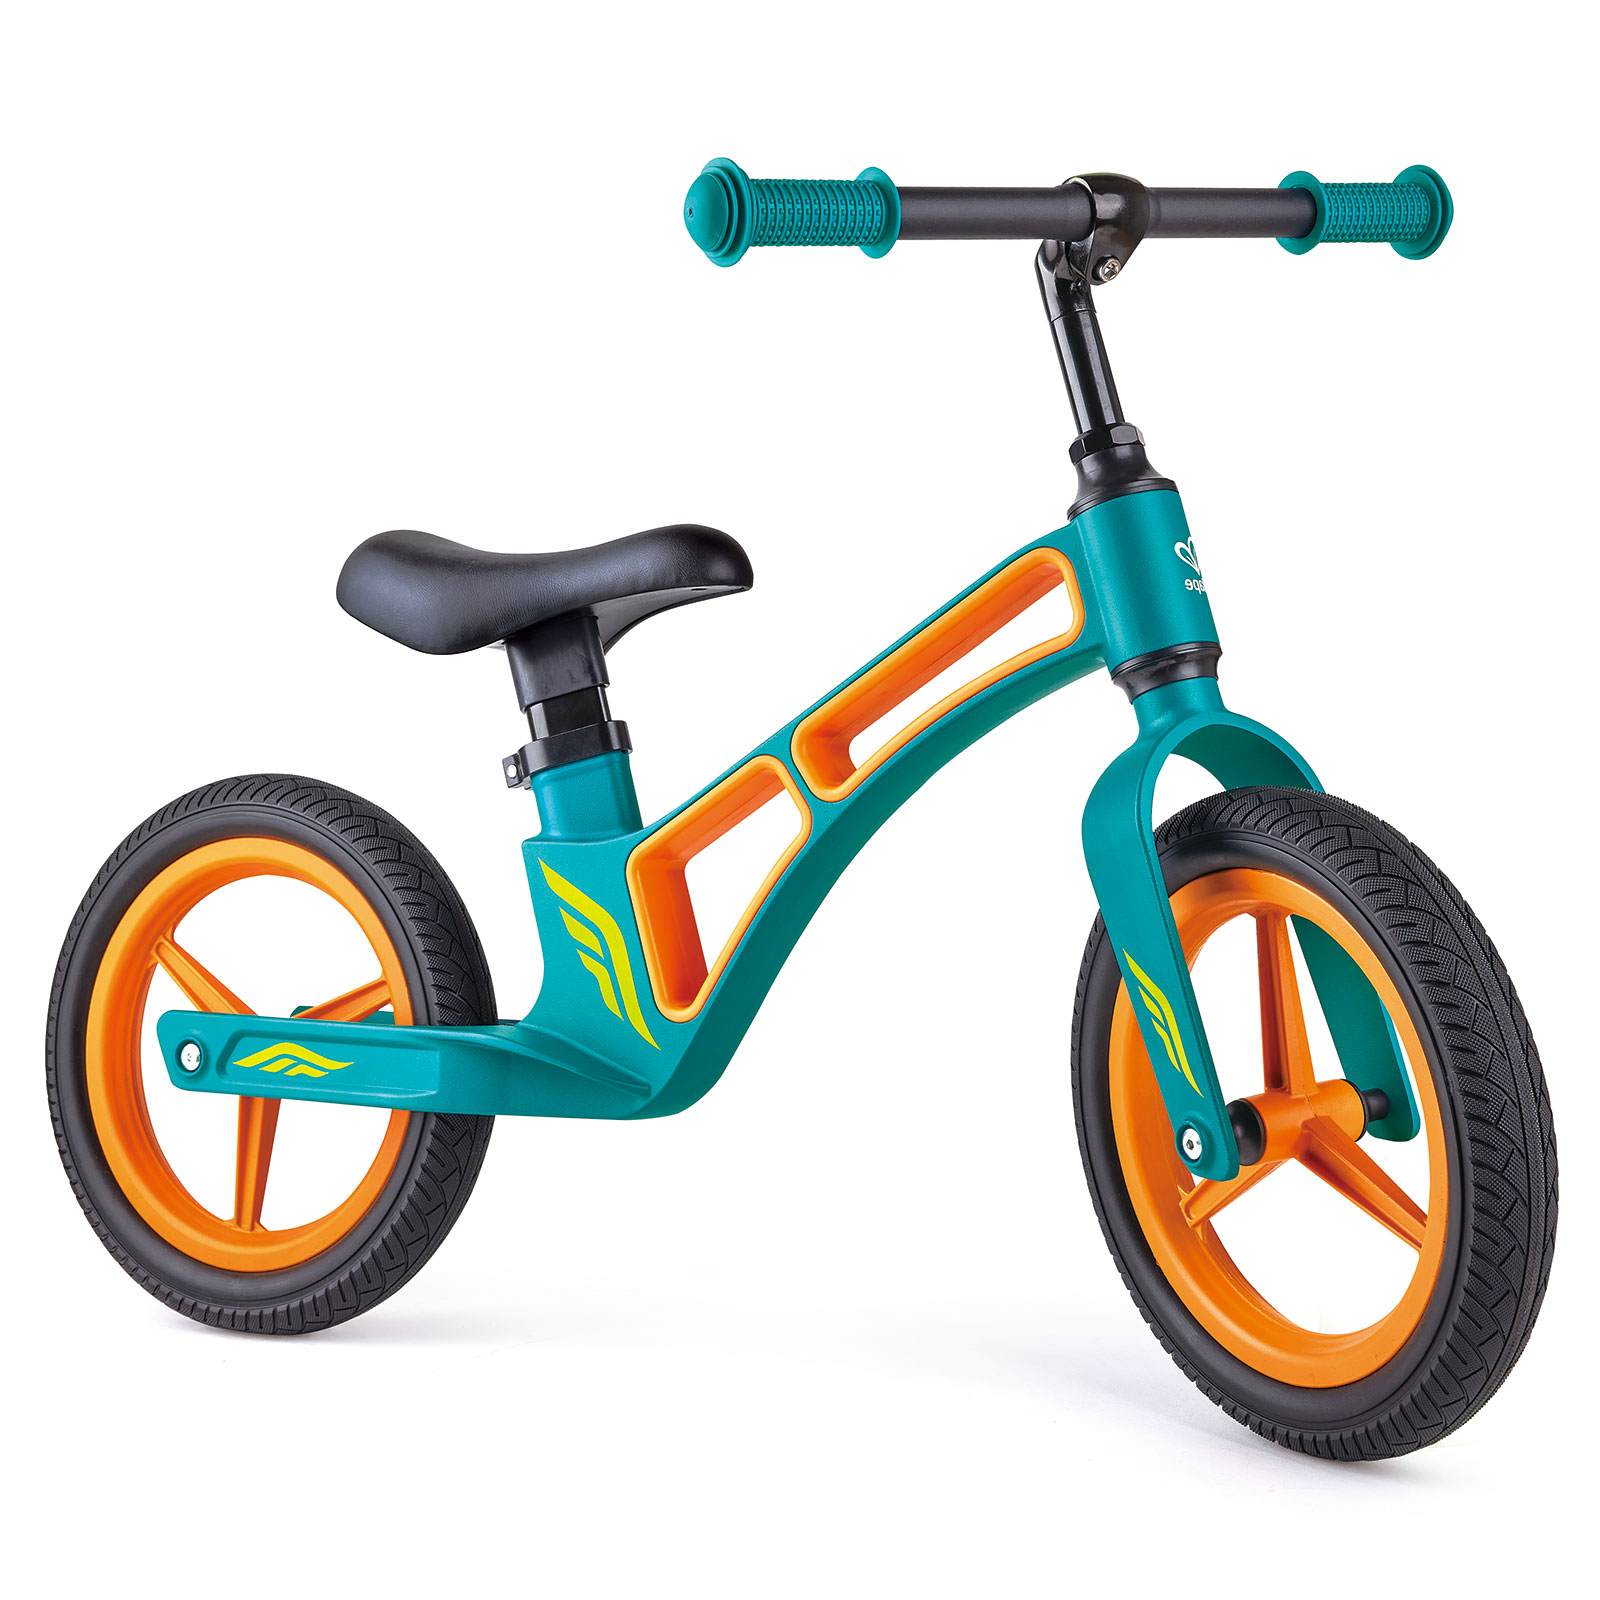 Hape New Explorer Balance Bike (3 Years+) - Blue/Orange